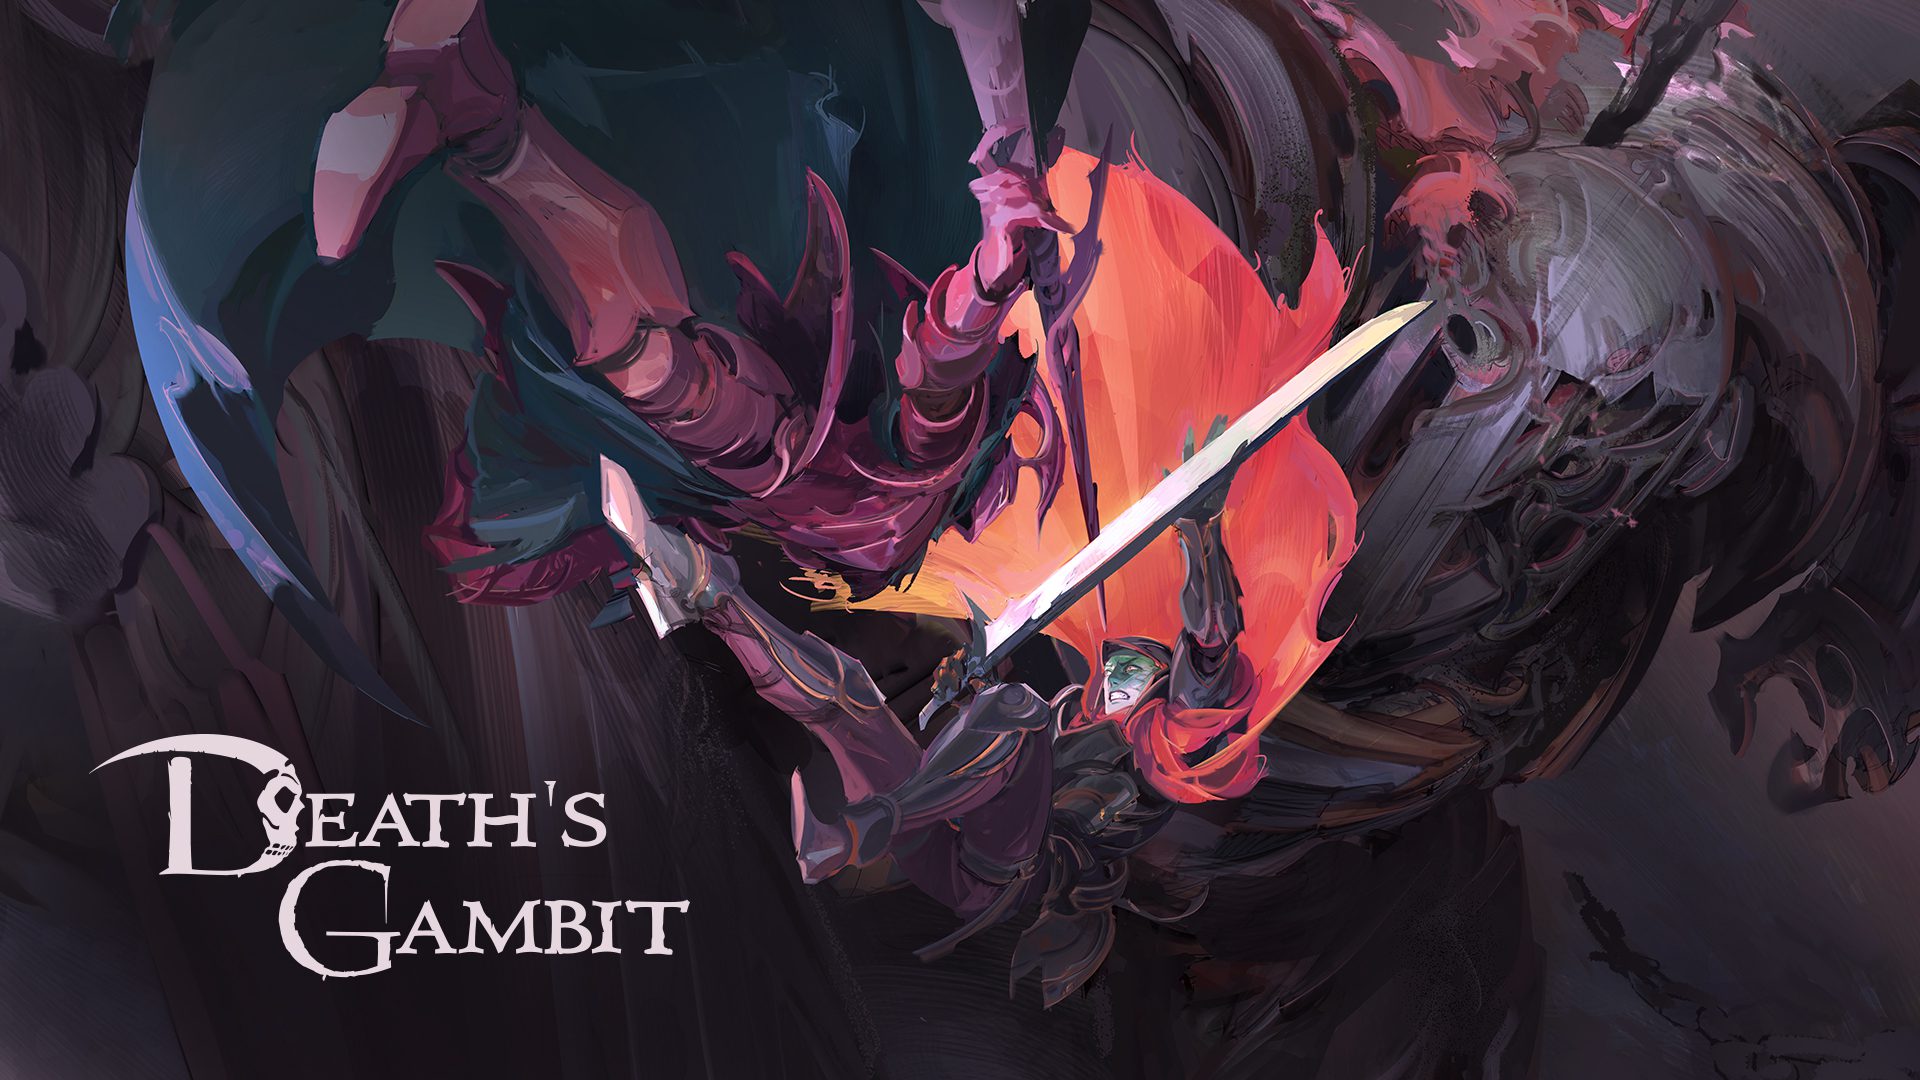 Adult Swim Games launch the slick-looking Death’s Gambit